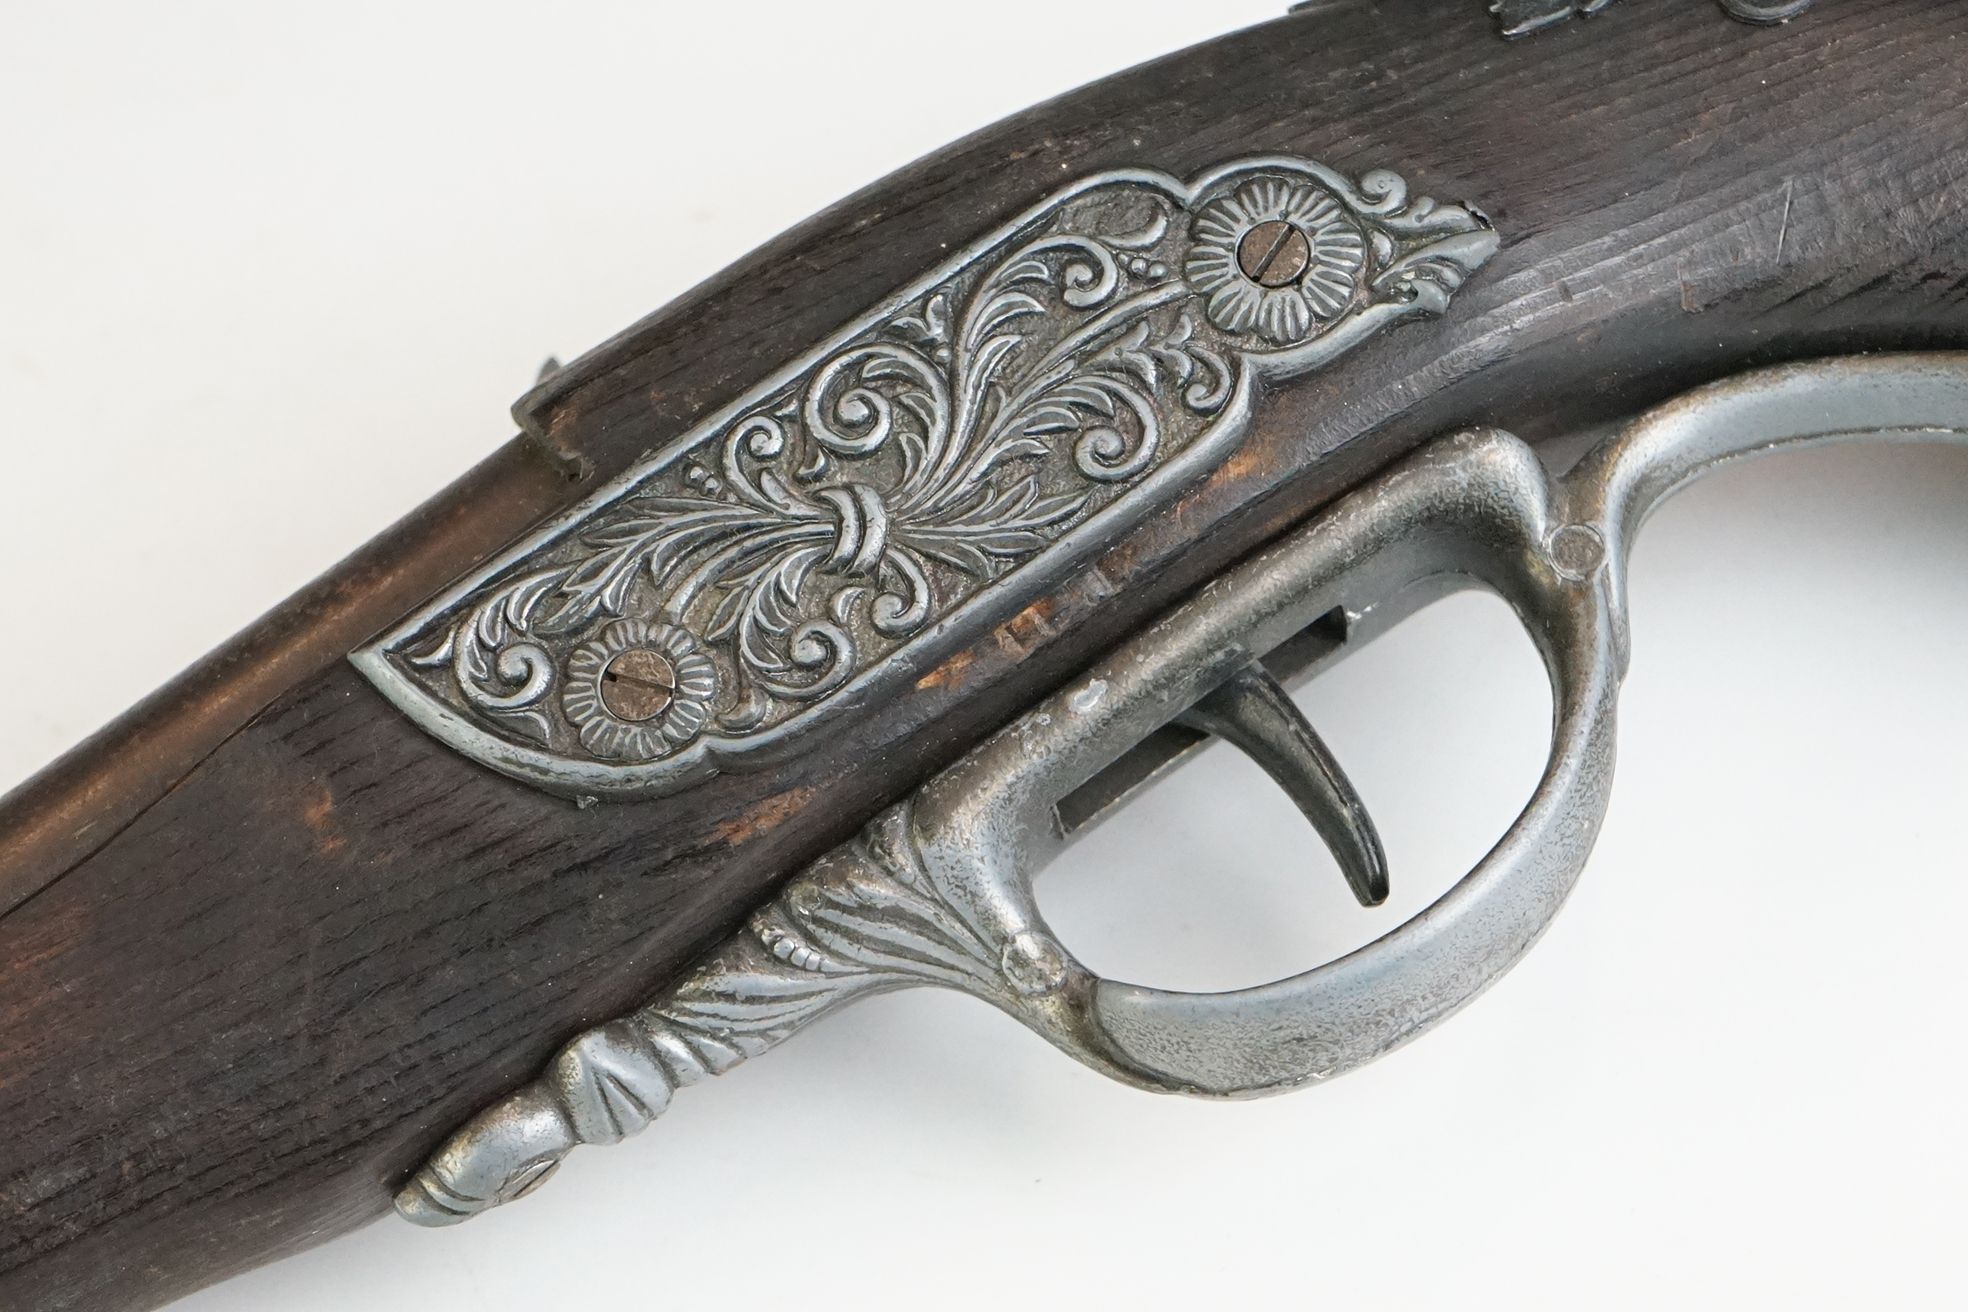 Pair of vintage replica flintlock pistols - Image 4 of 11